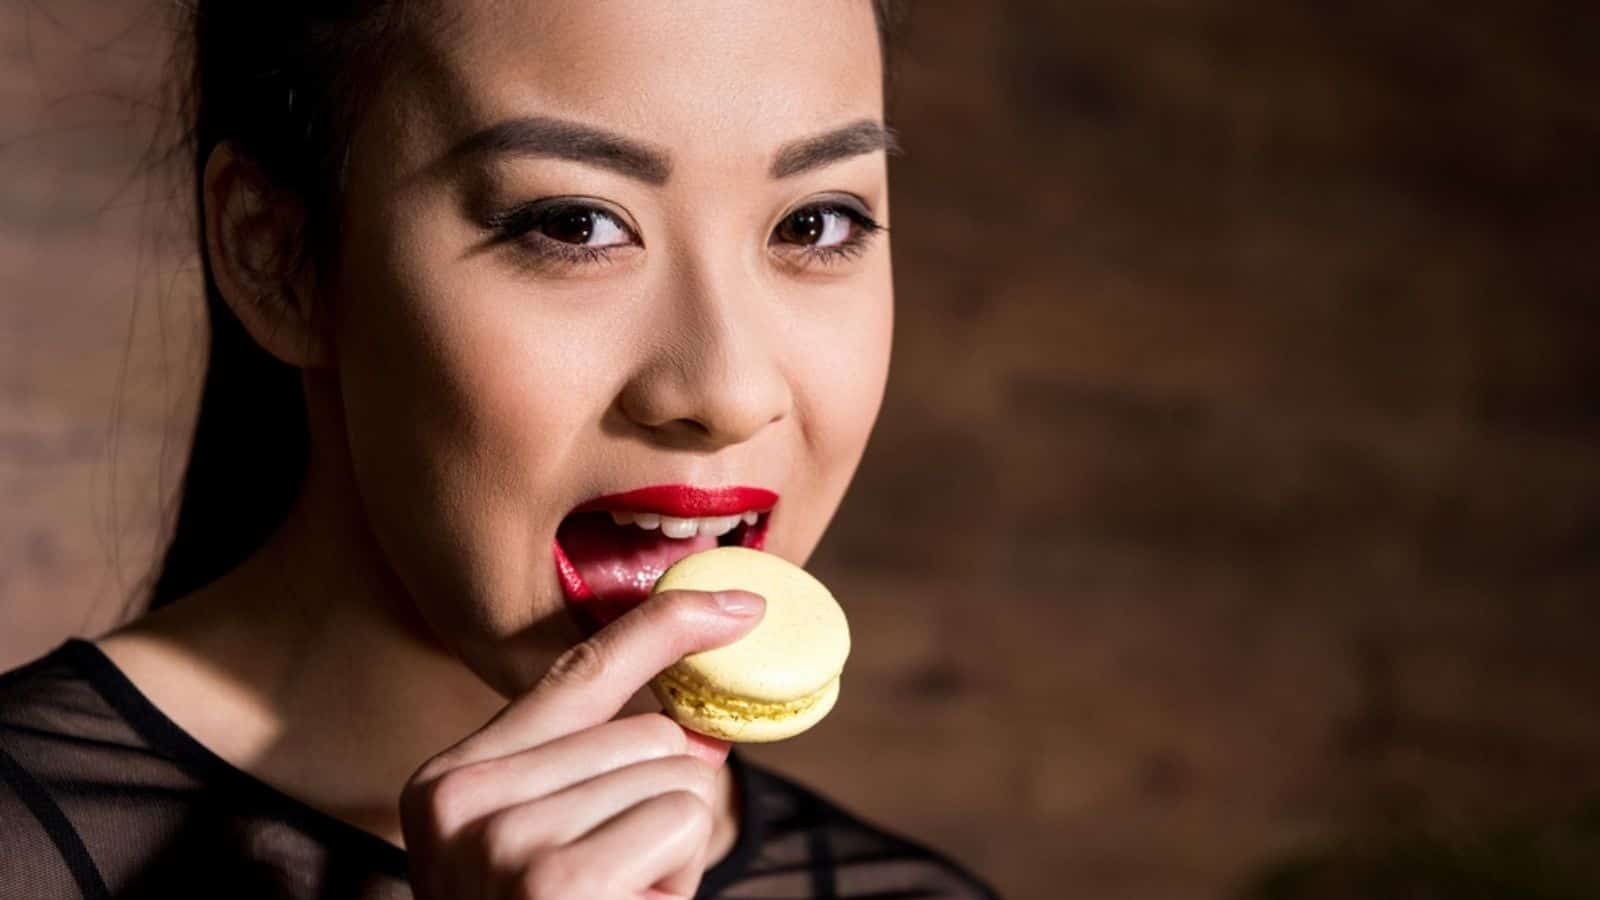 Asian woman with macaron